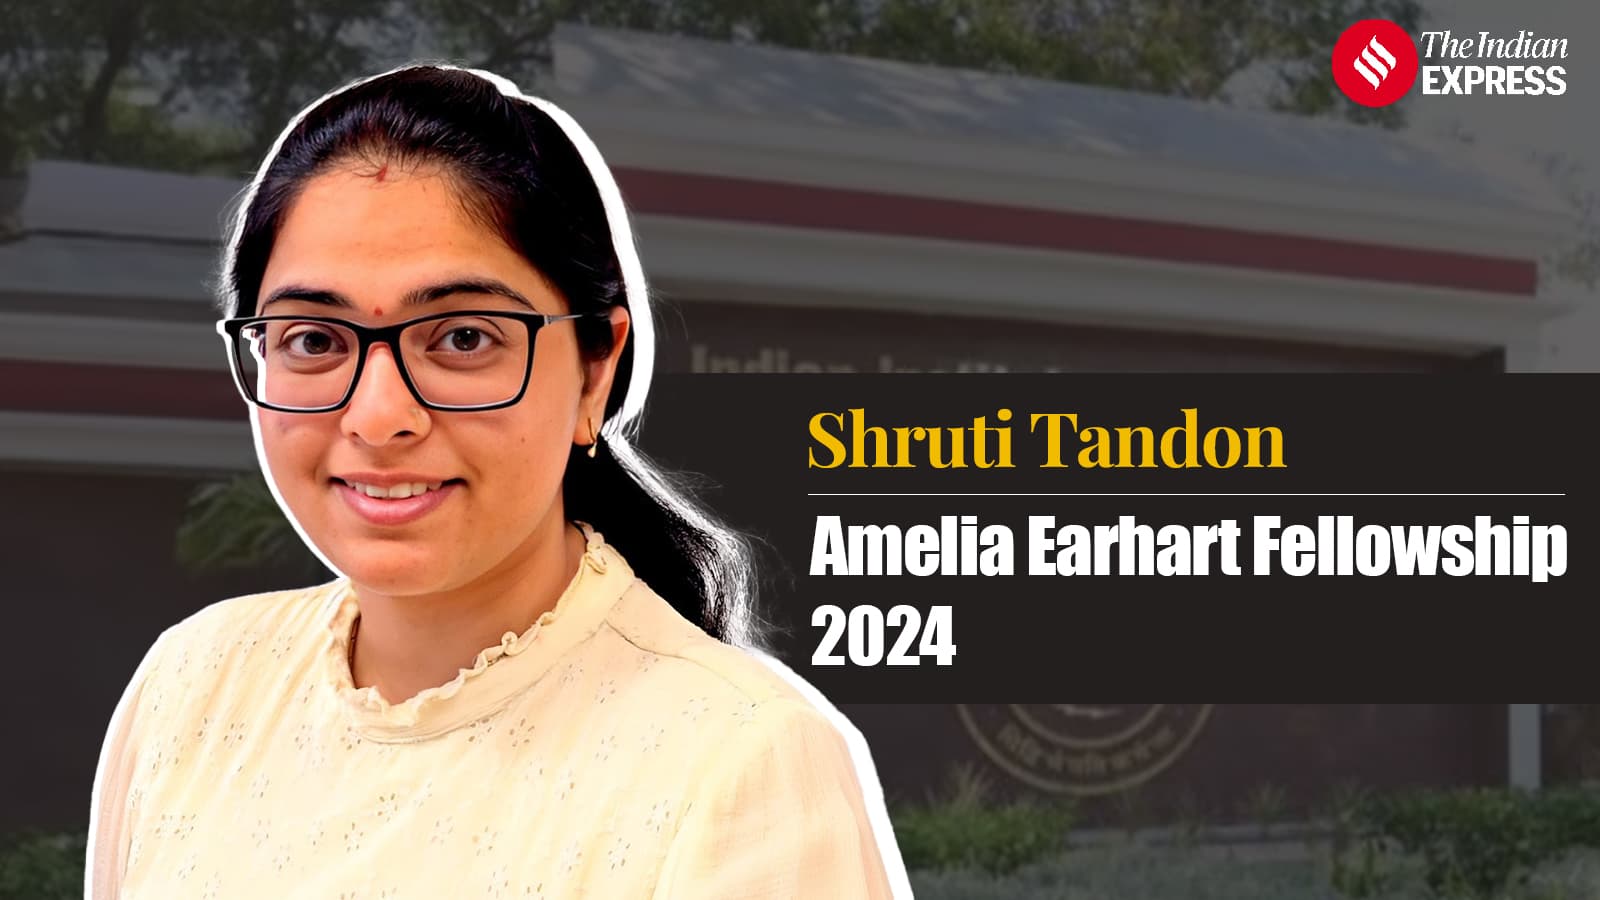 IIT Madras’s research scholar Shruti Tandon bags prestigious Amelia Earhart Fellowship